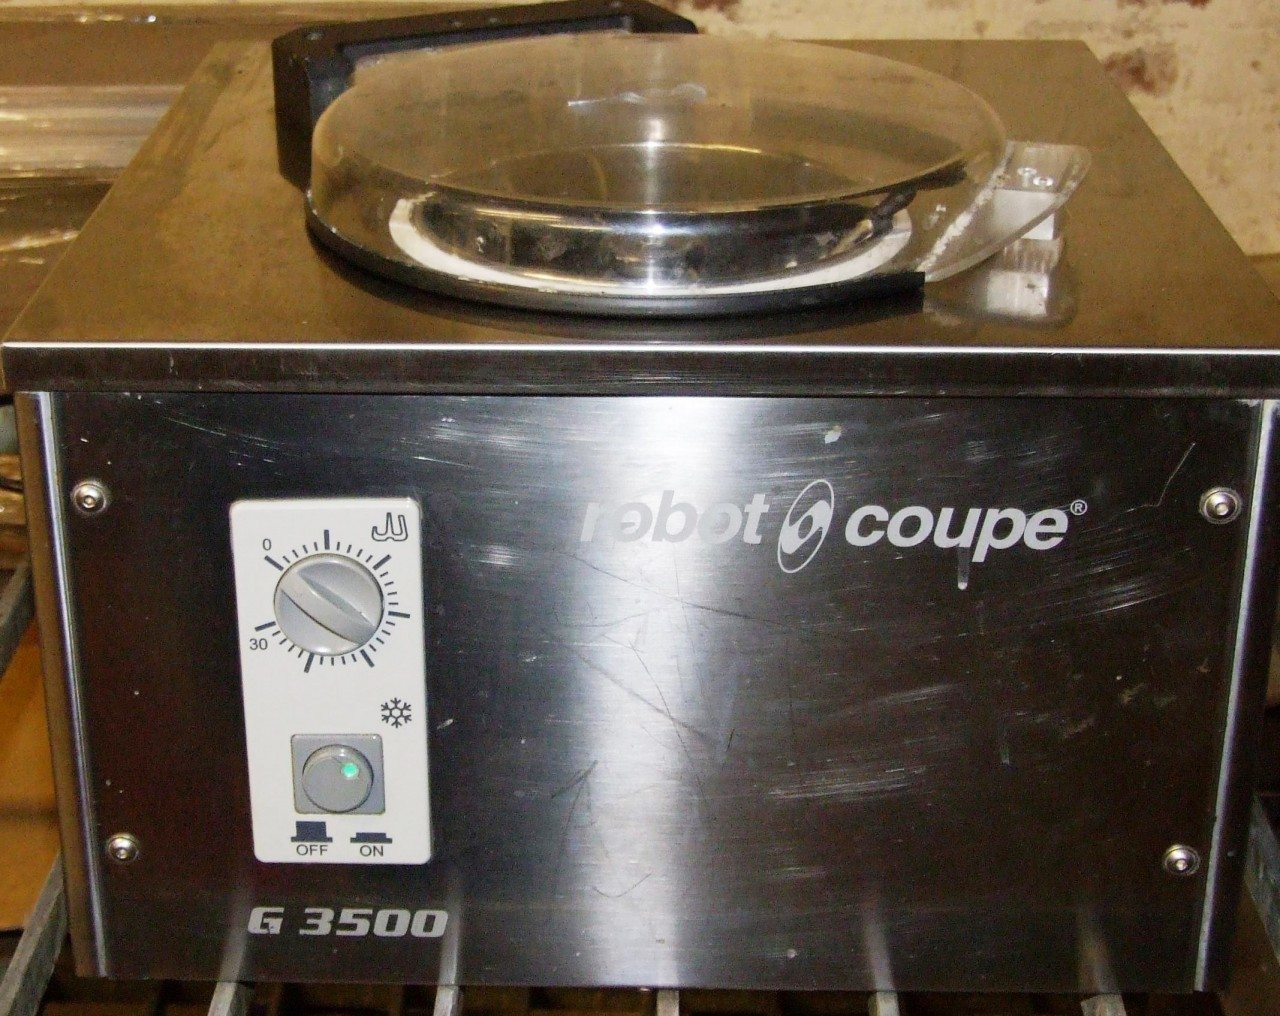 ROBOT COUPE G3500 Ice Cream Maker 1